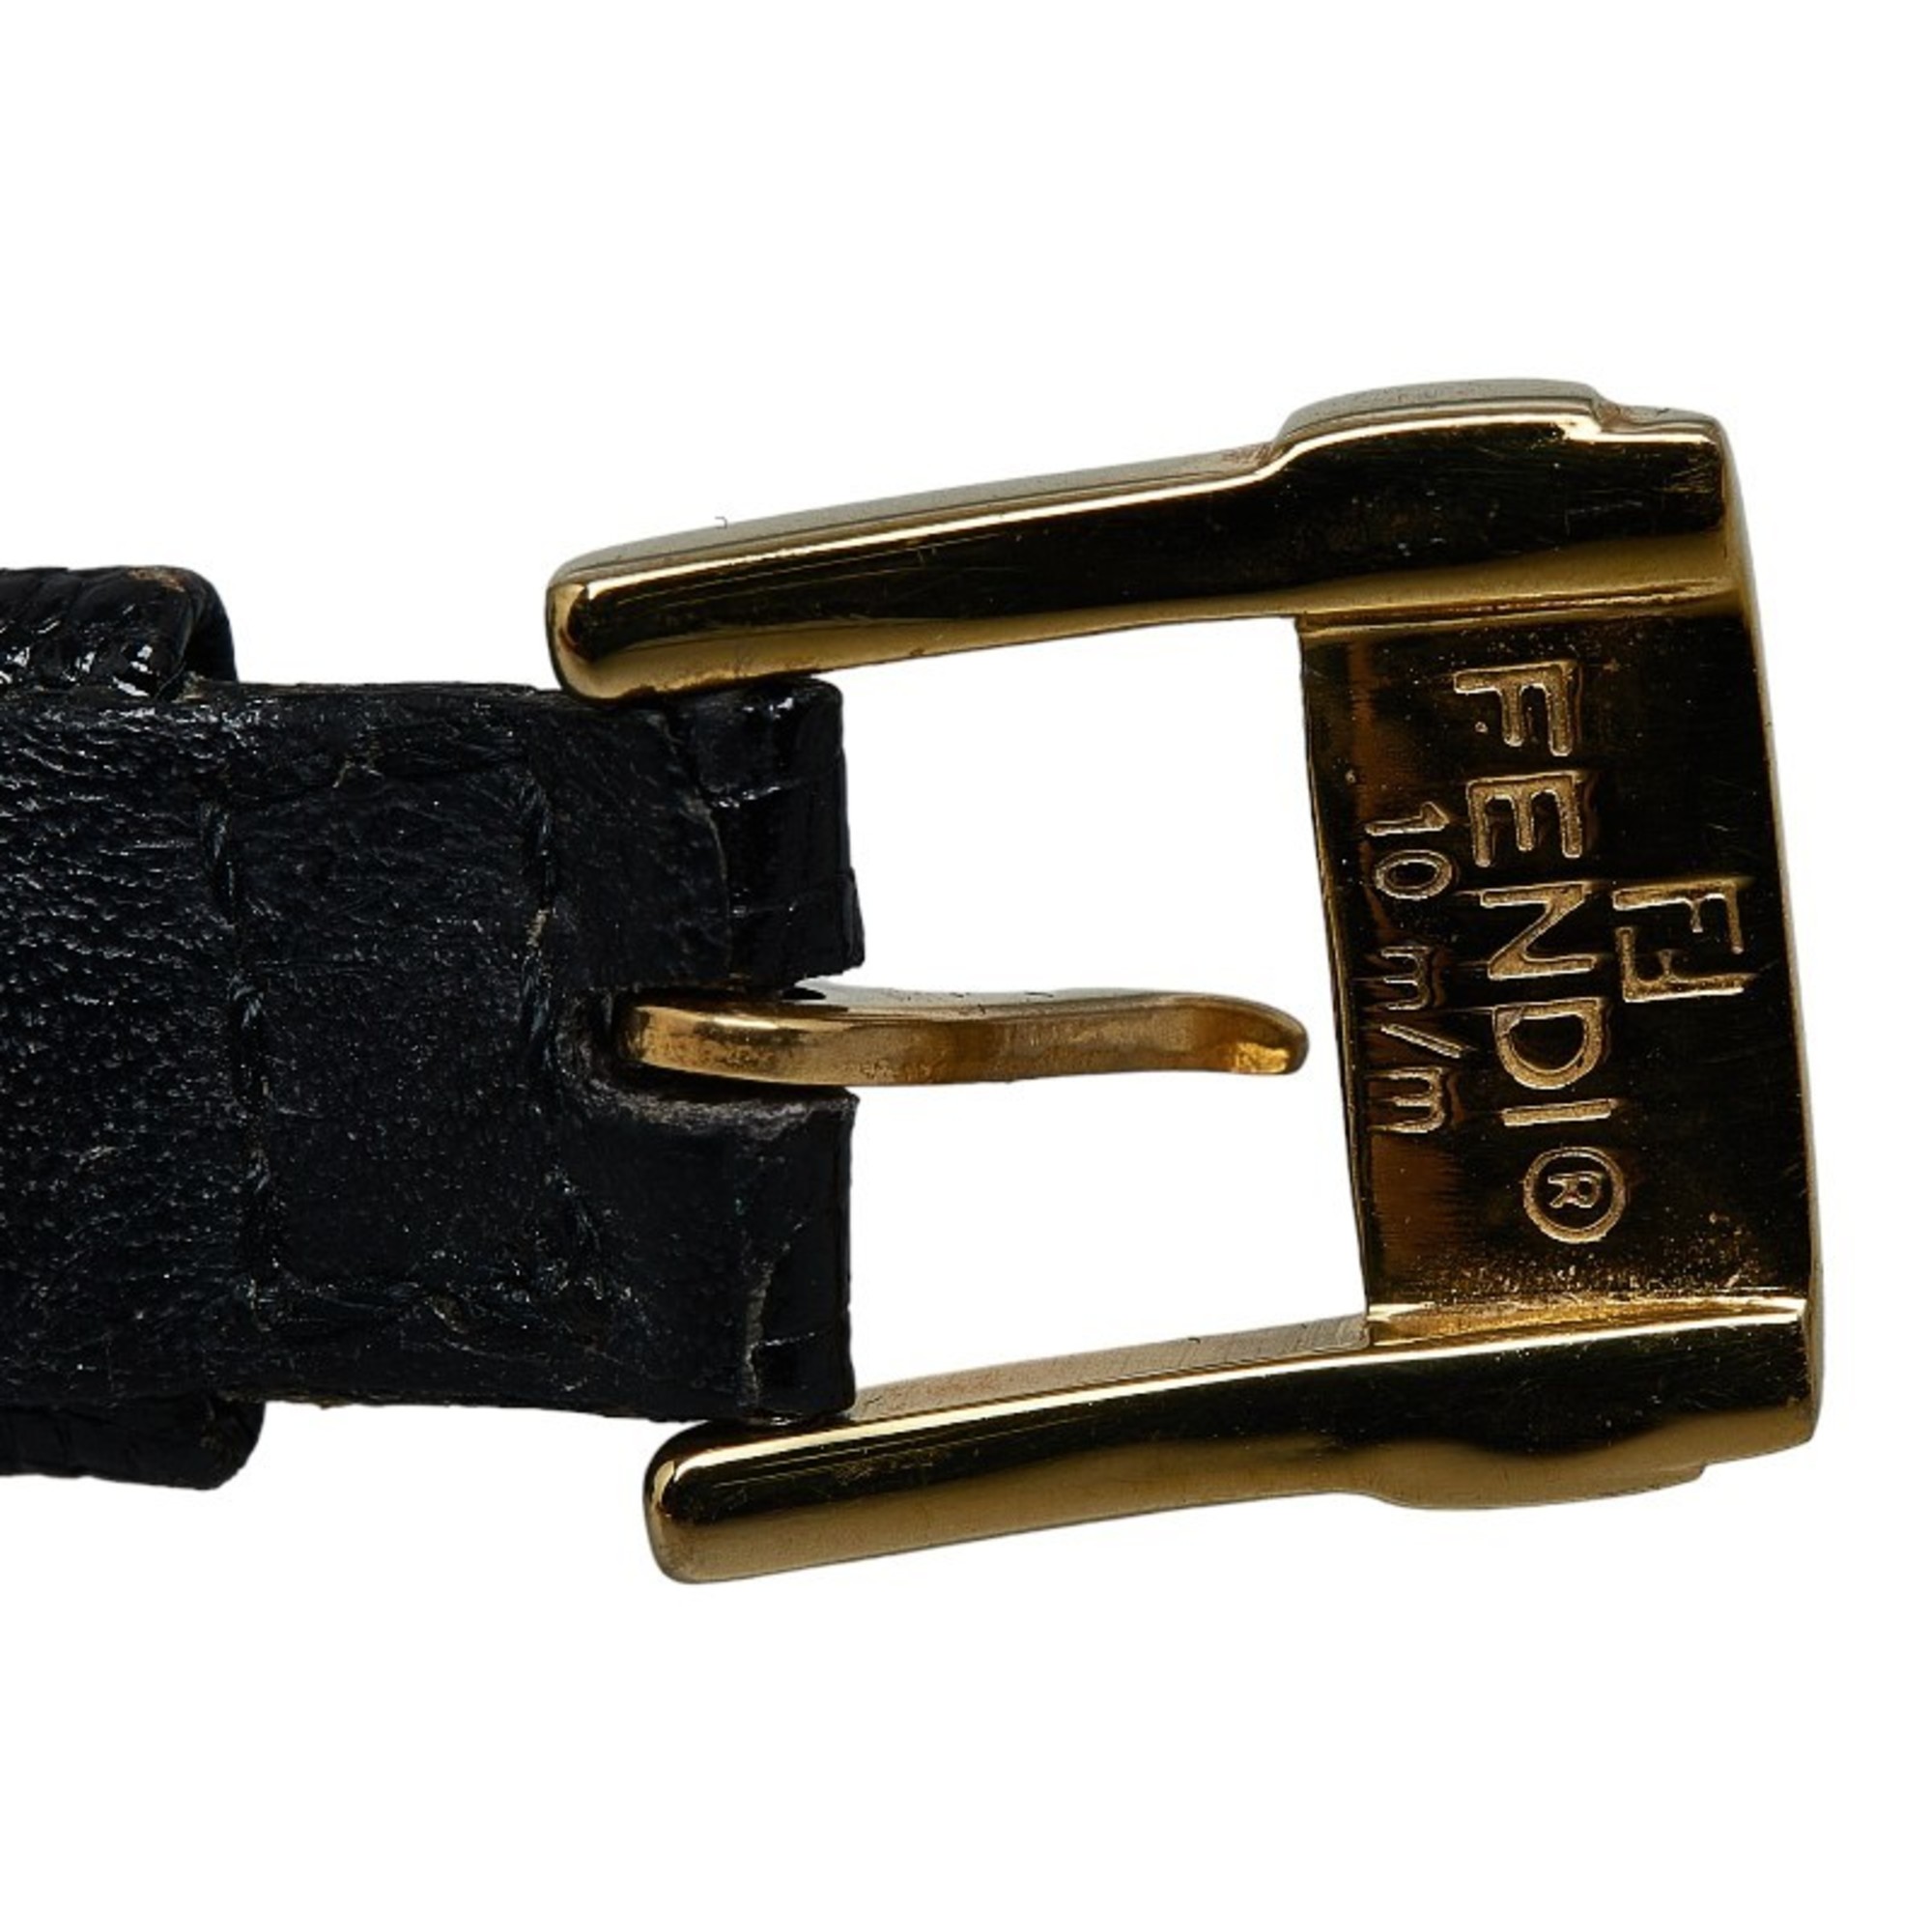 Fendi Chameleon Changeable Strap 5 Colors Watch 640L Quartz White Dial Leather Plated Women's FENDI